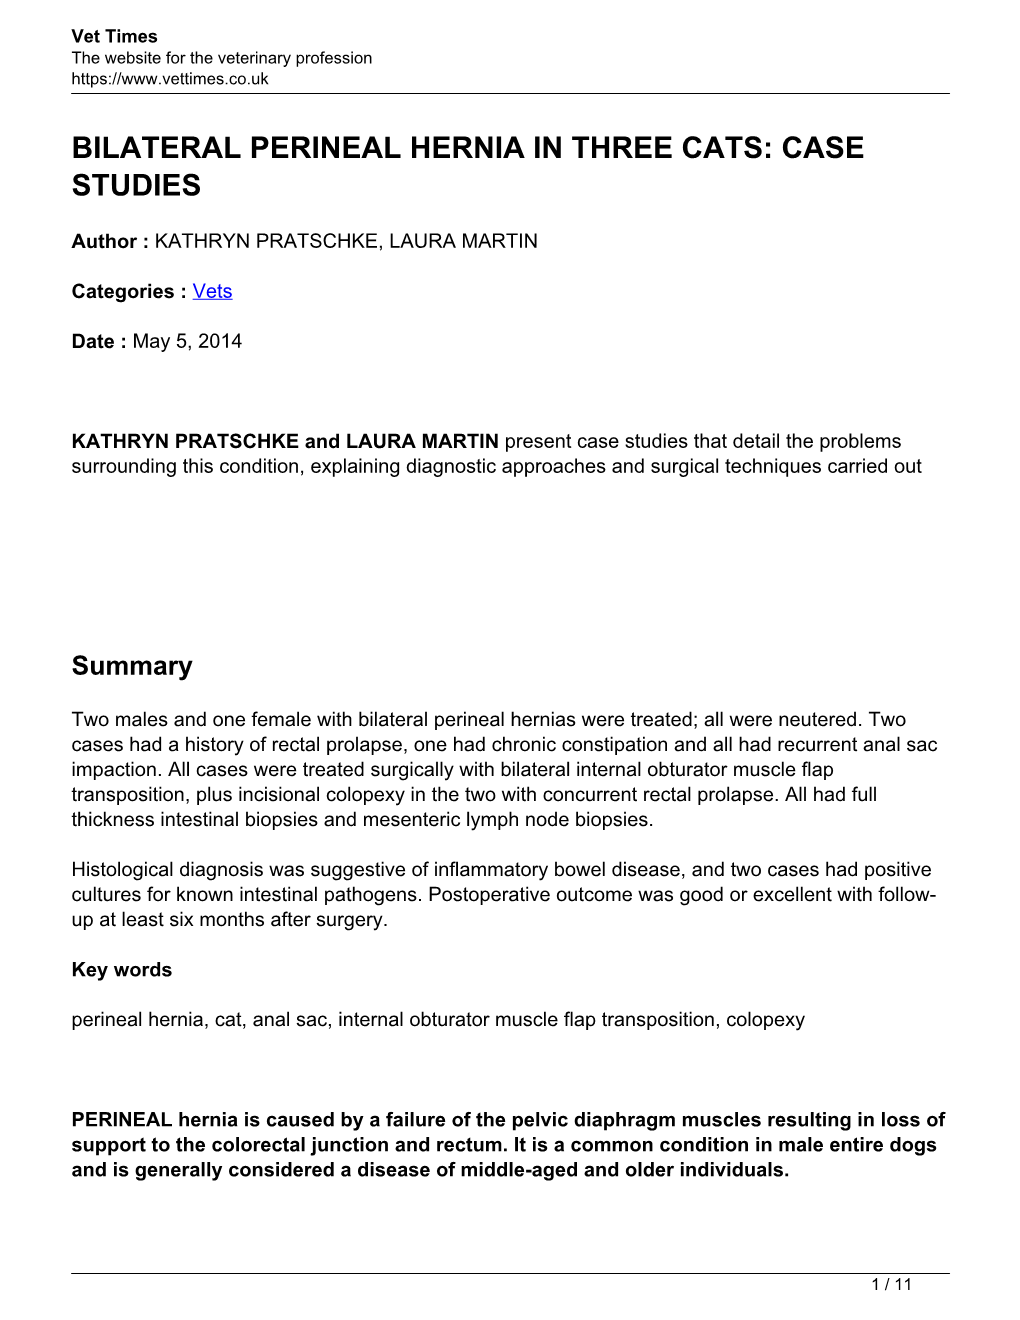 Bilateral Perineal Hernia in Three Cats: Case Studies